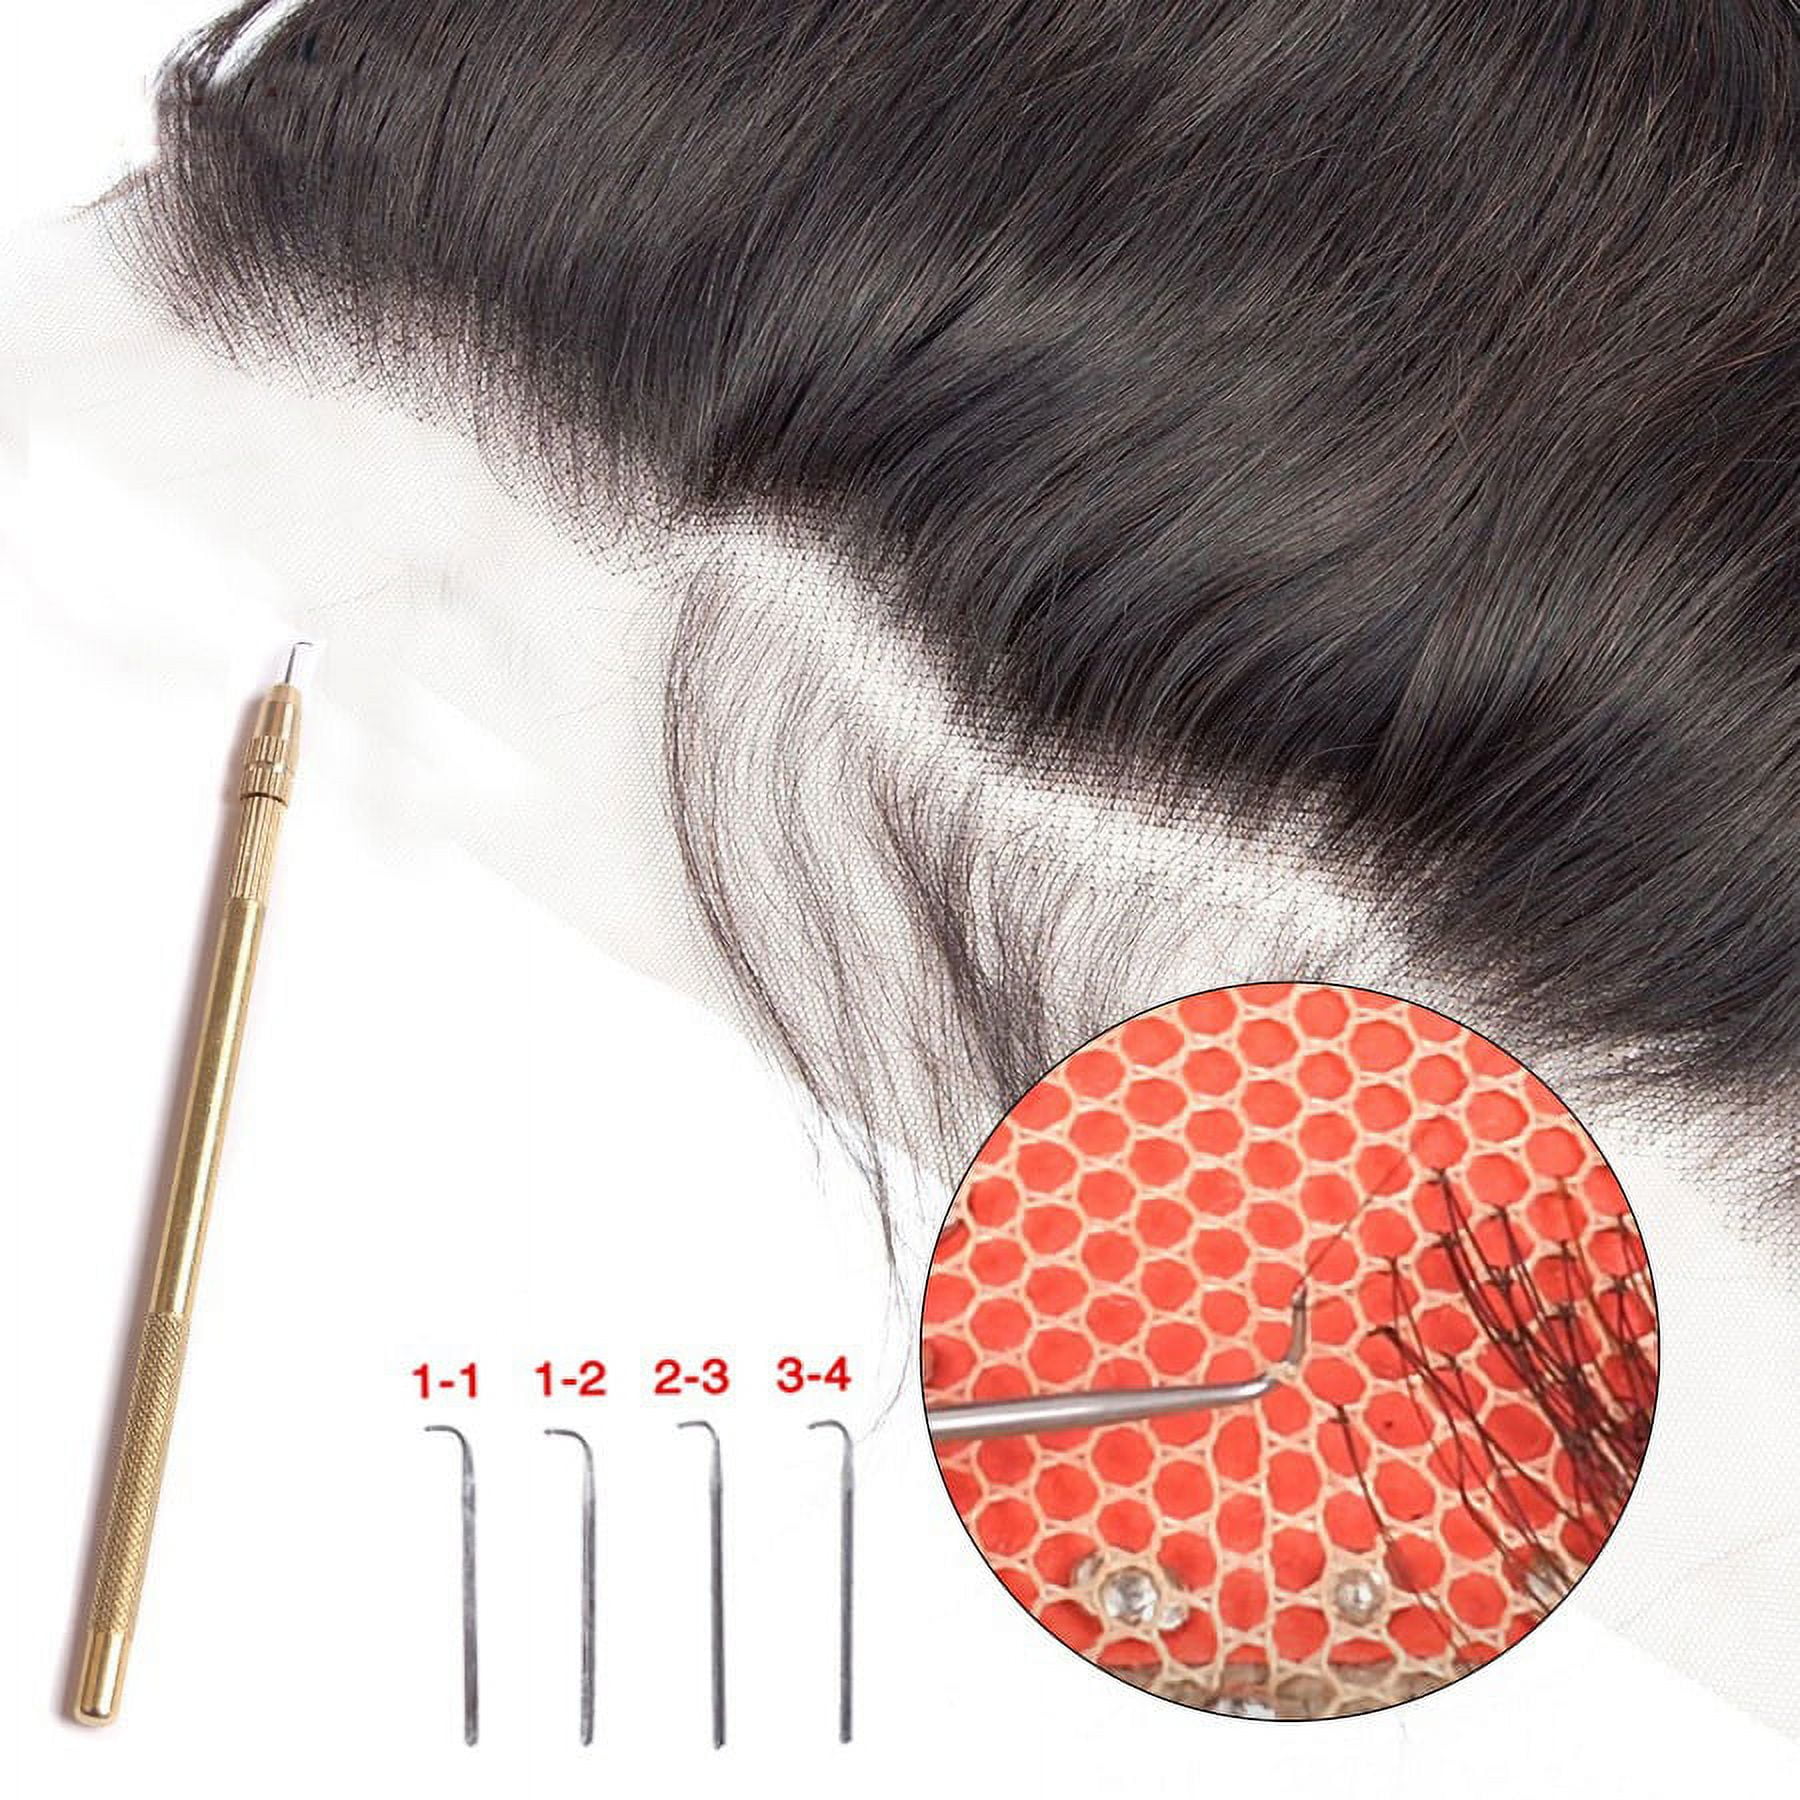 JETTINGBUY 1Pair Ventilation Needles Front Lace Wigs Toupee Make Net  Crochet Hook Pins Extension